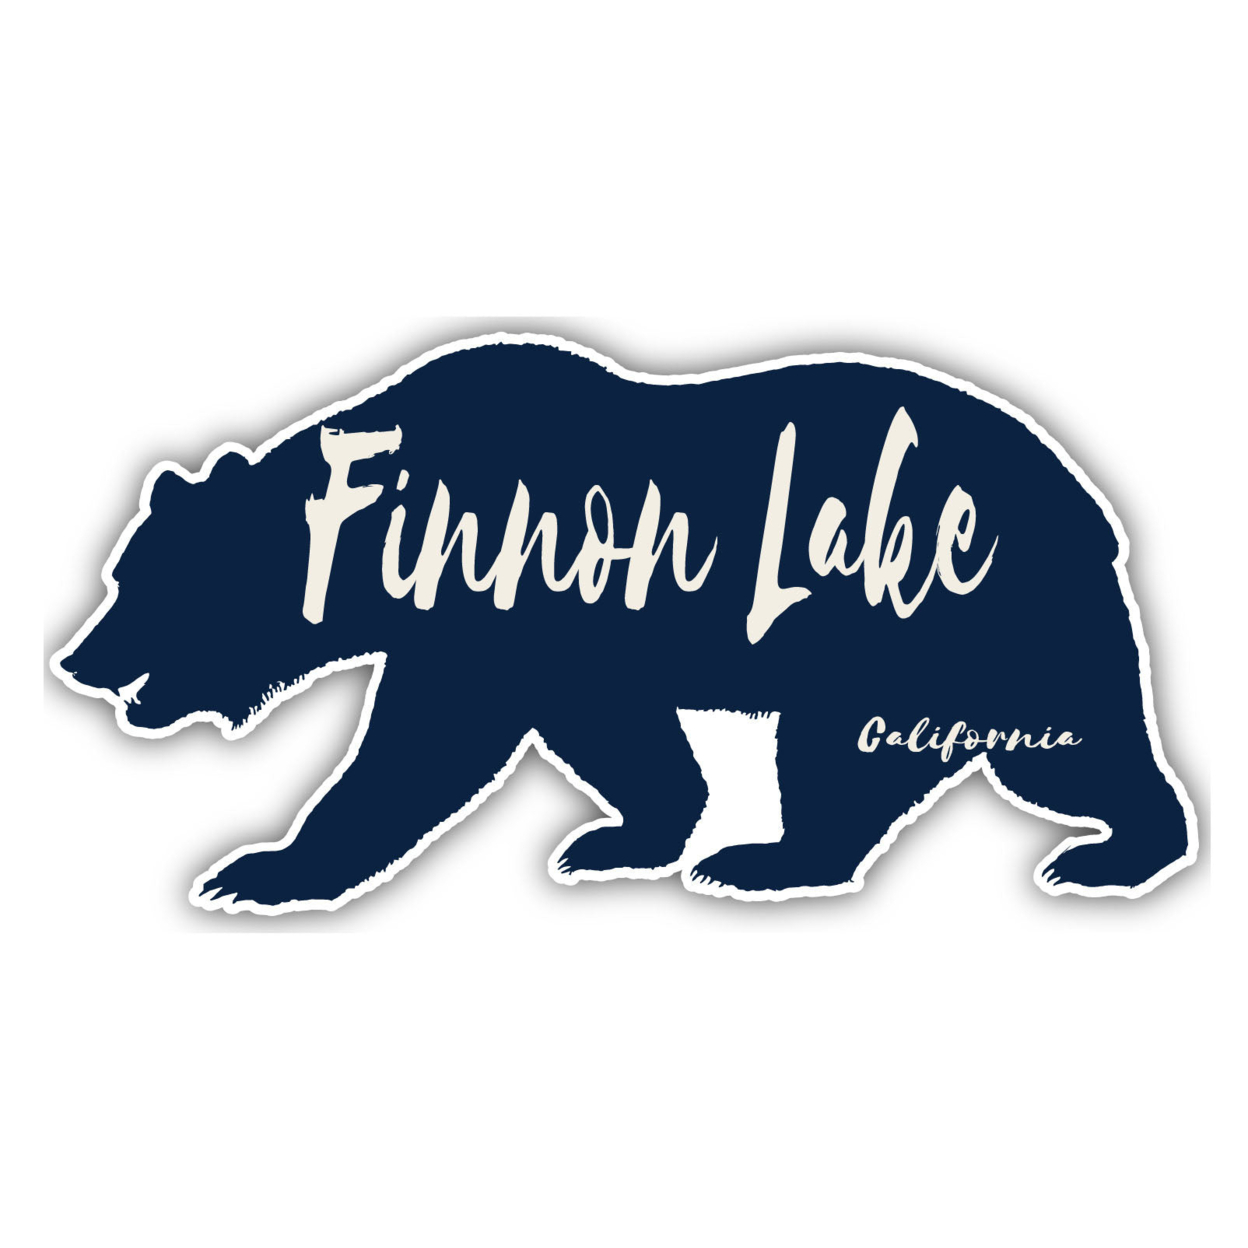 Finnon Lake California Souvenir Decorative Stickers (Choose Theme And Size) - 4-Pack, 10-Inch, Tent